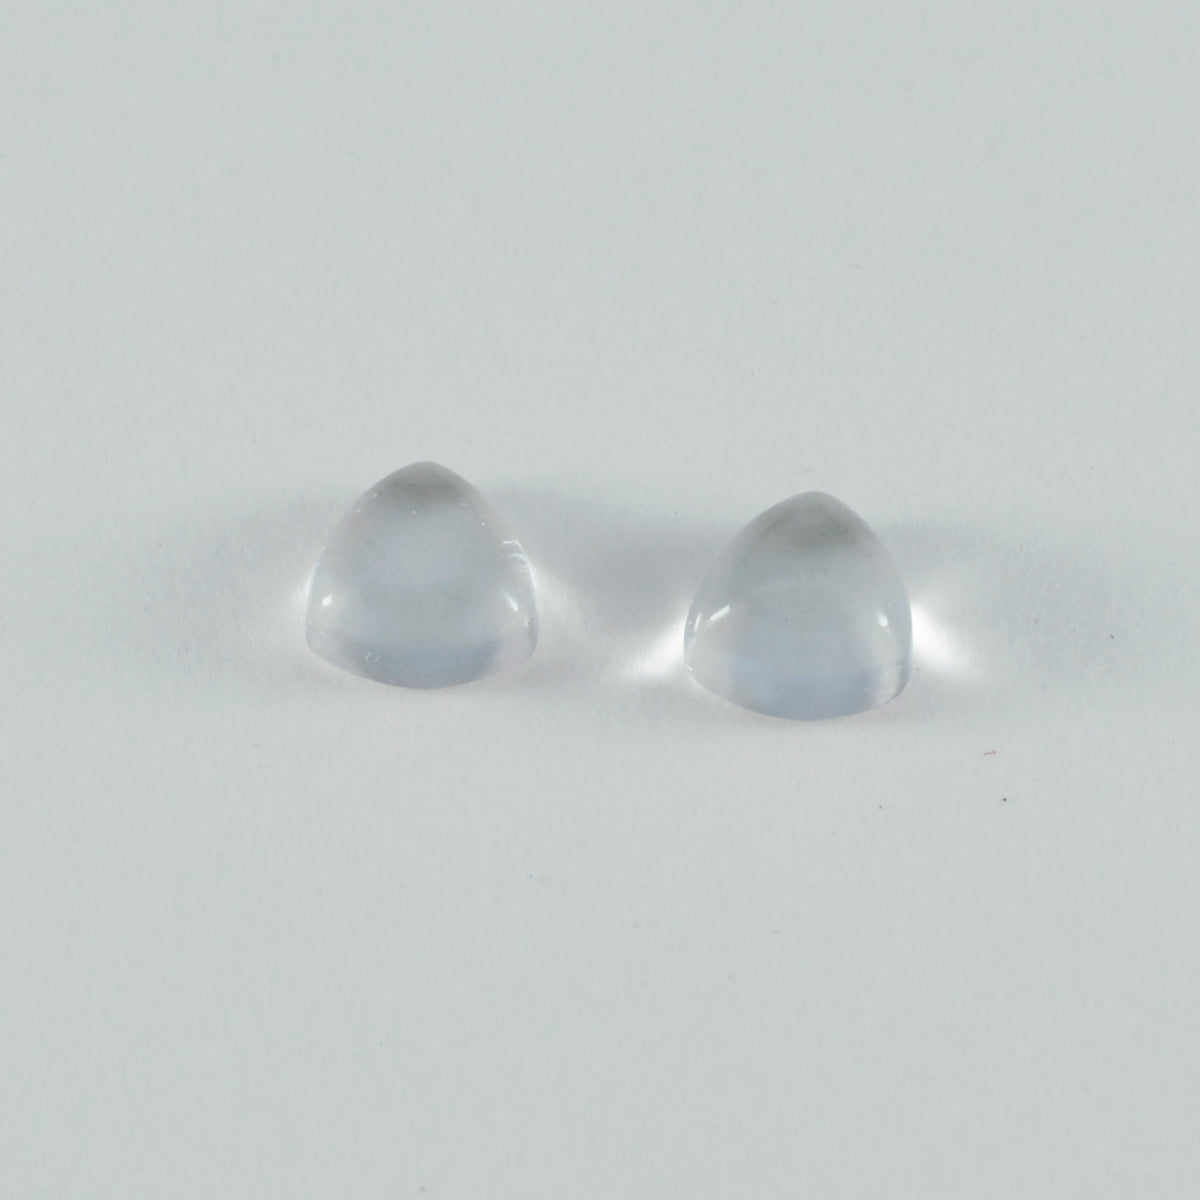 Riyogems 1PC White Crystal Quartz Cabochon 11x11 mm Trillion Shape awesome Quality Loose Gems